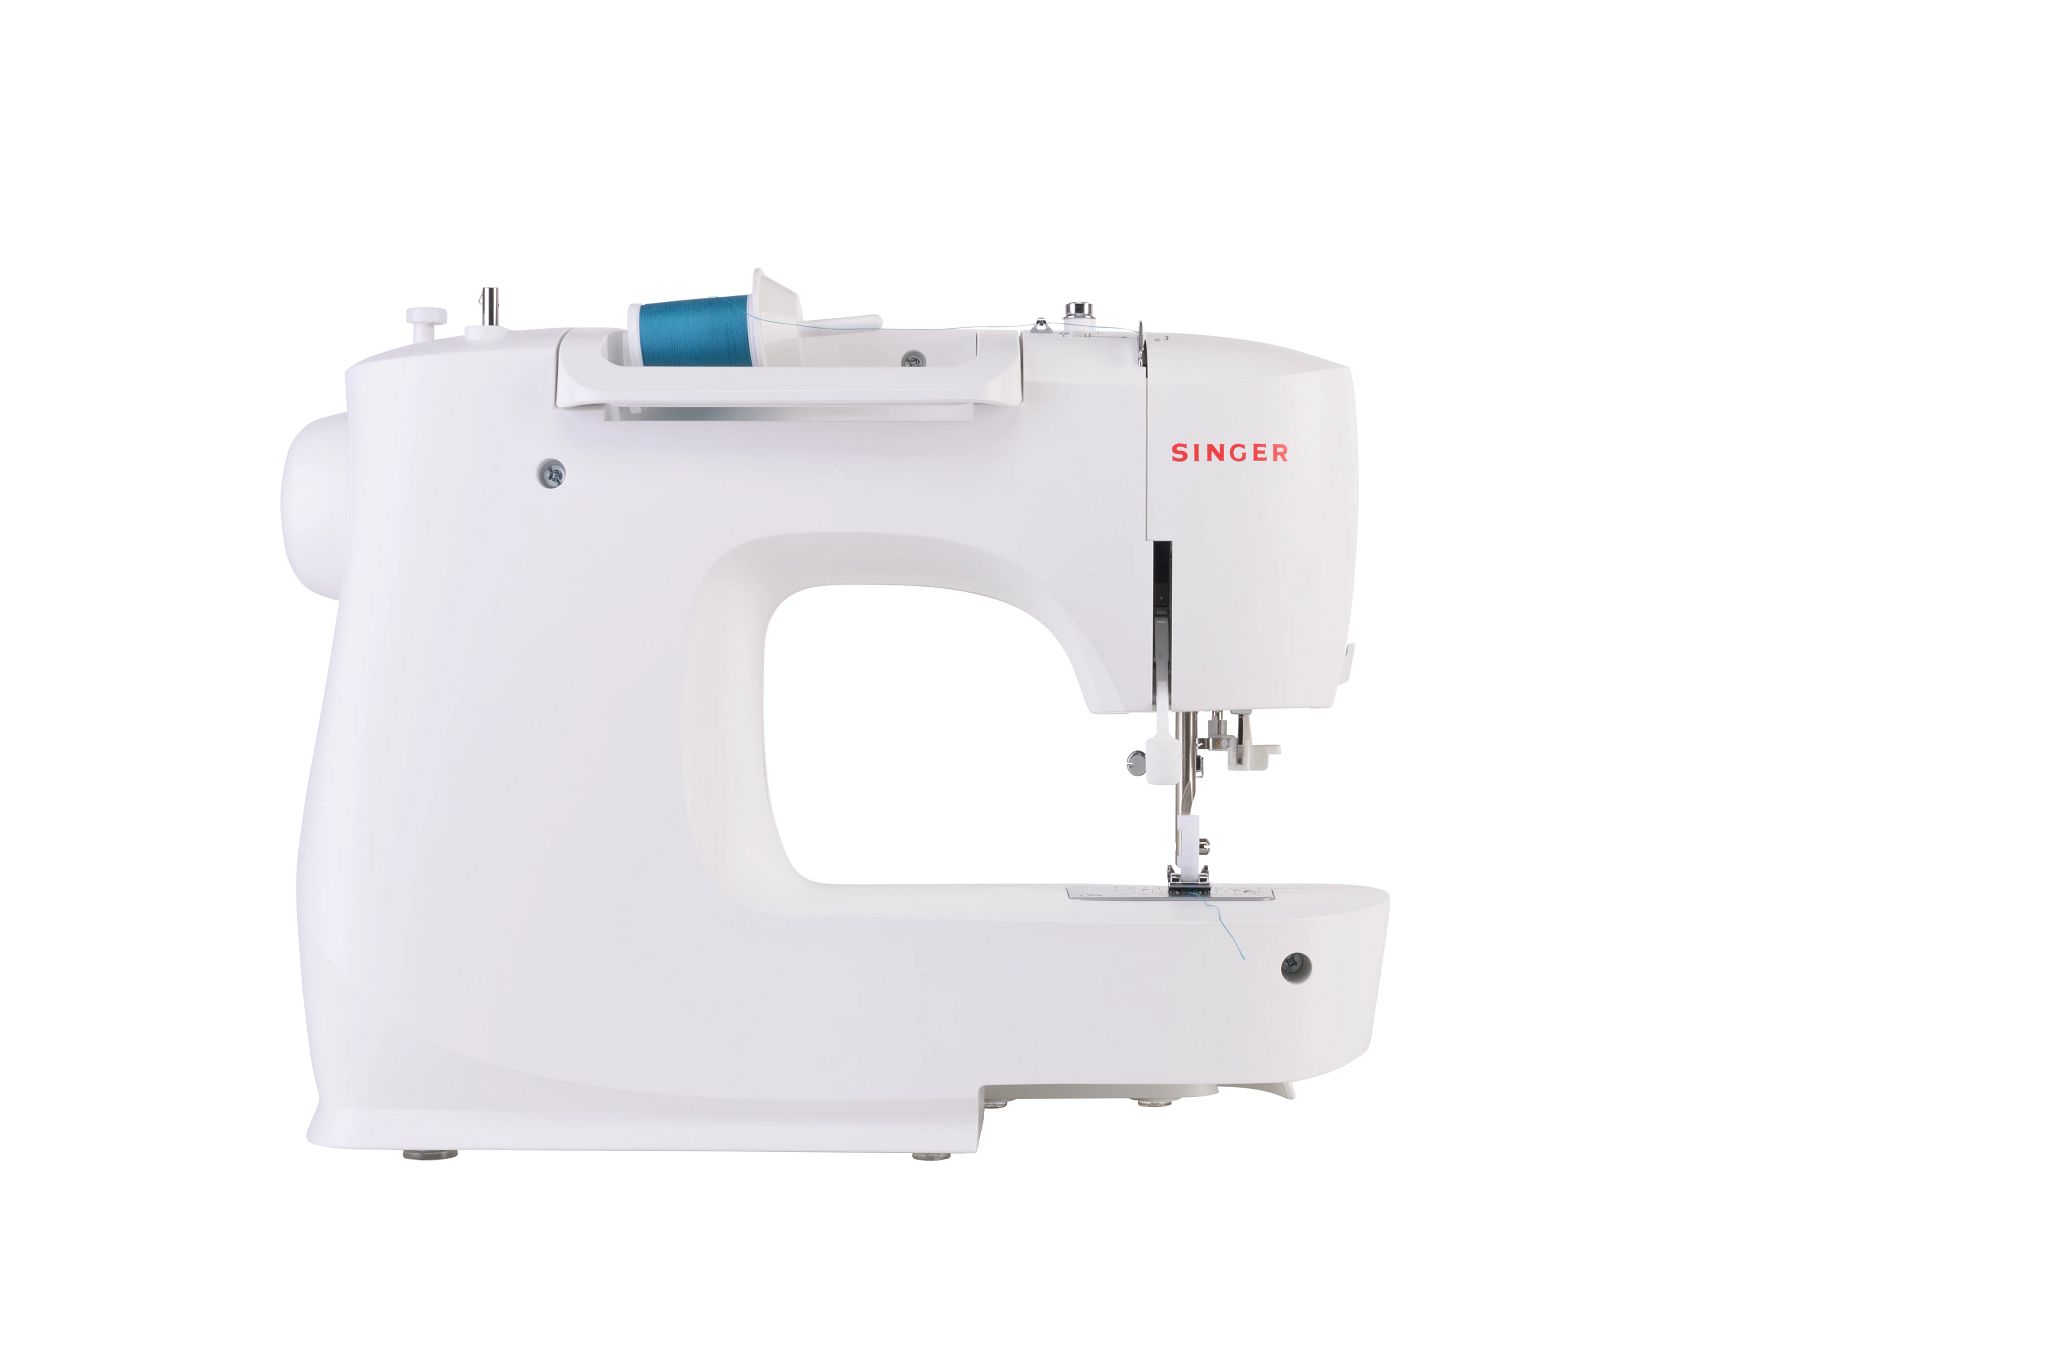 M3300 Sewing Machine